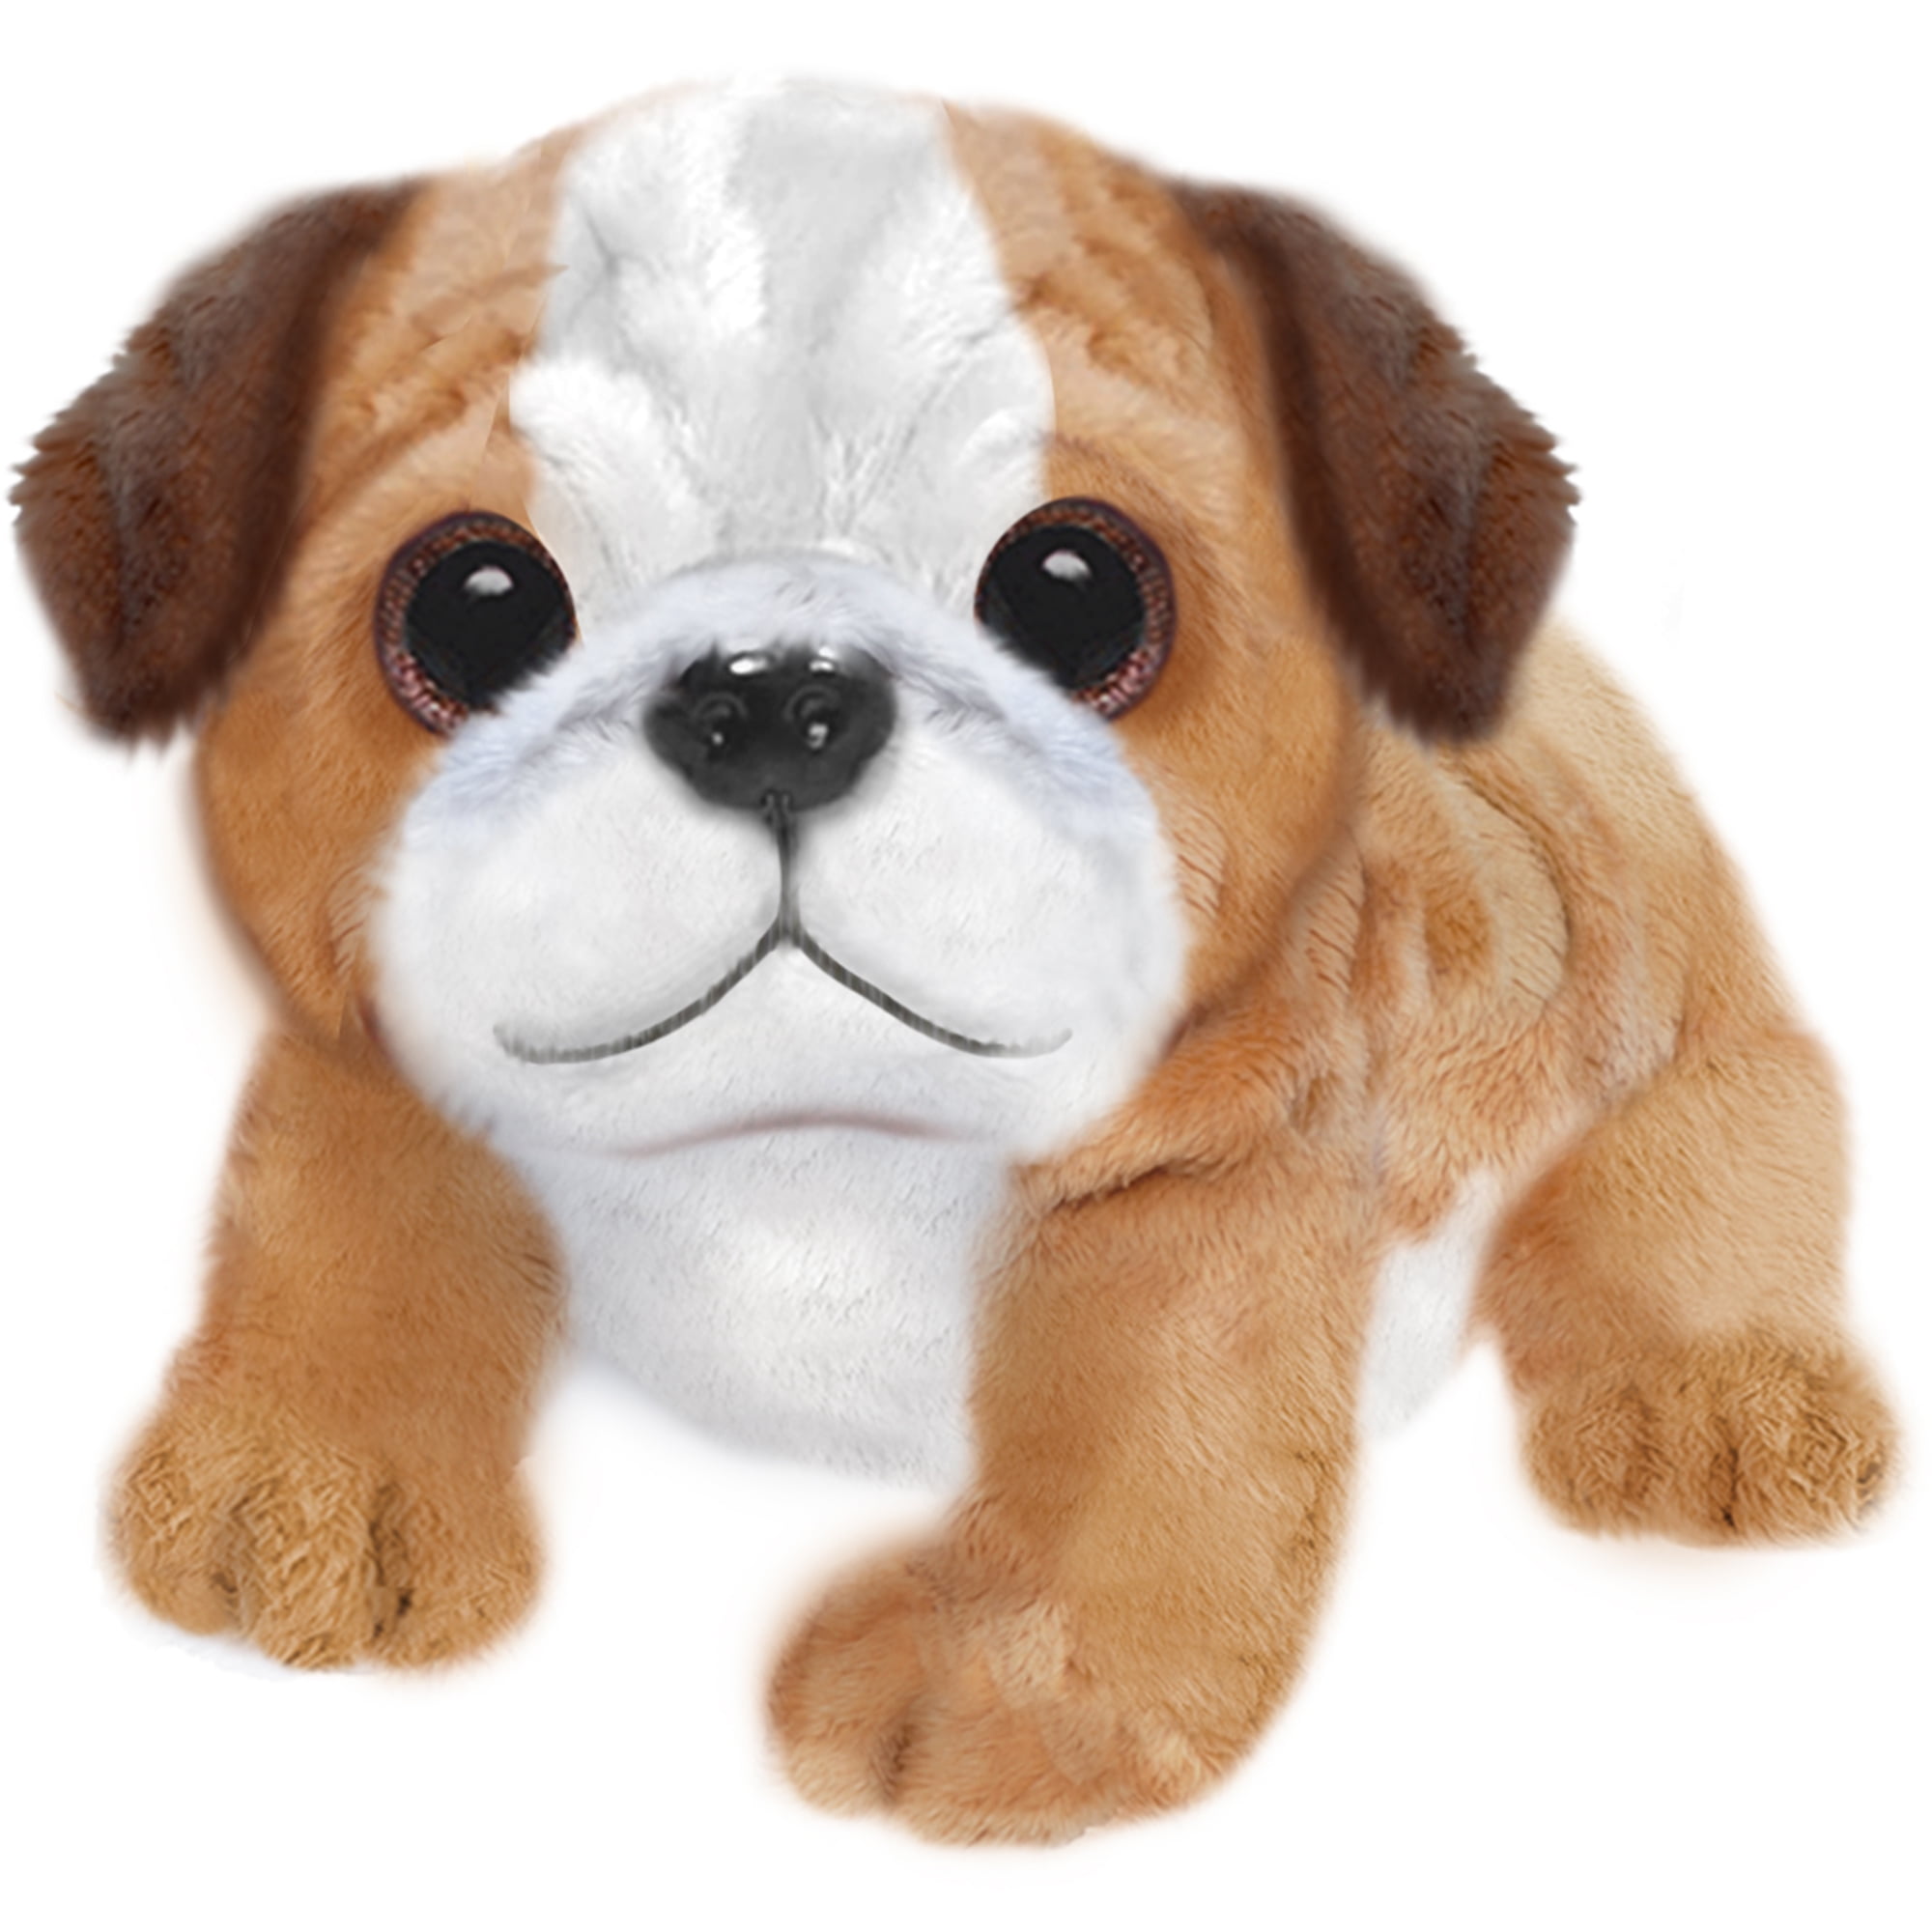 16 Inch Hardy Bulldog Plush Stuffed Animal by Douglas for sale online 